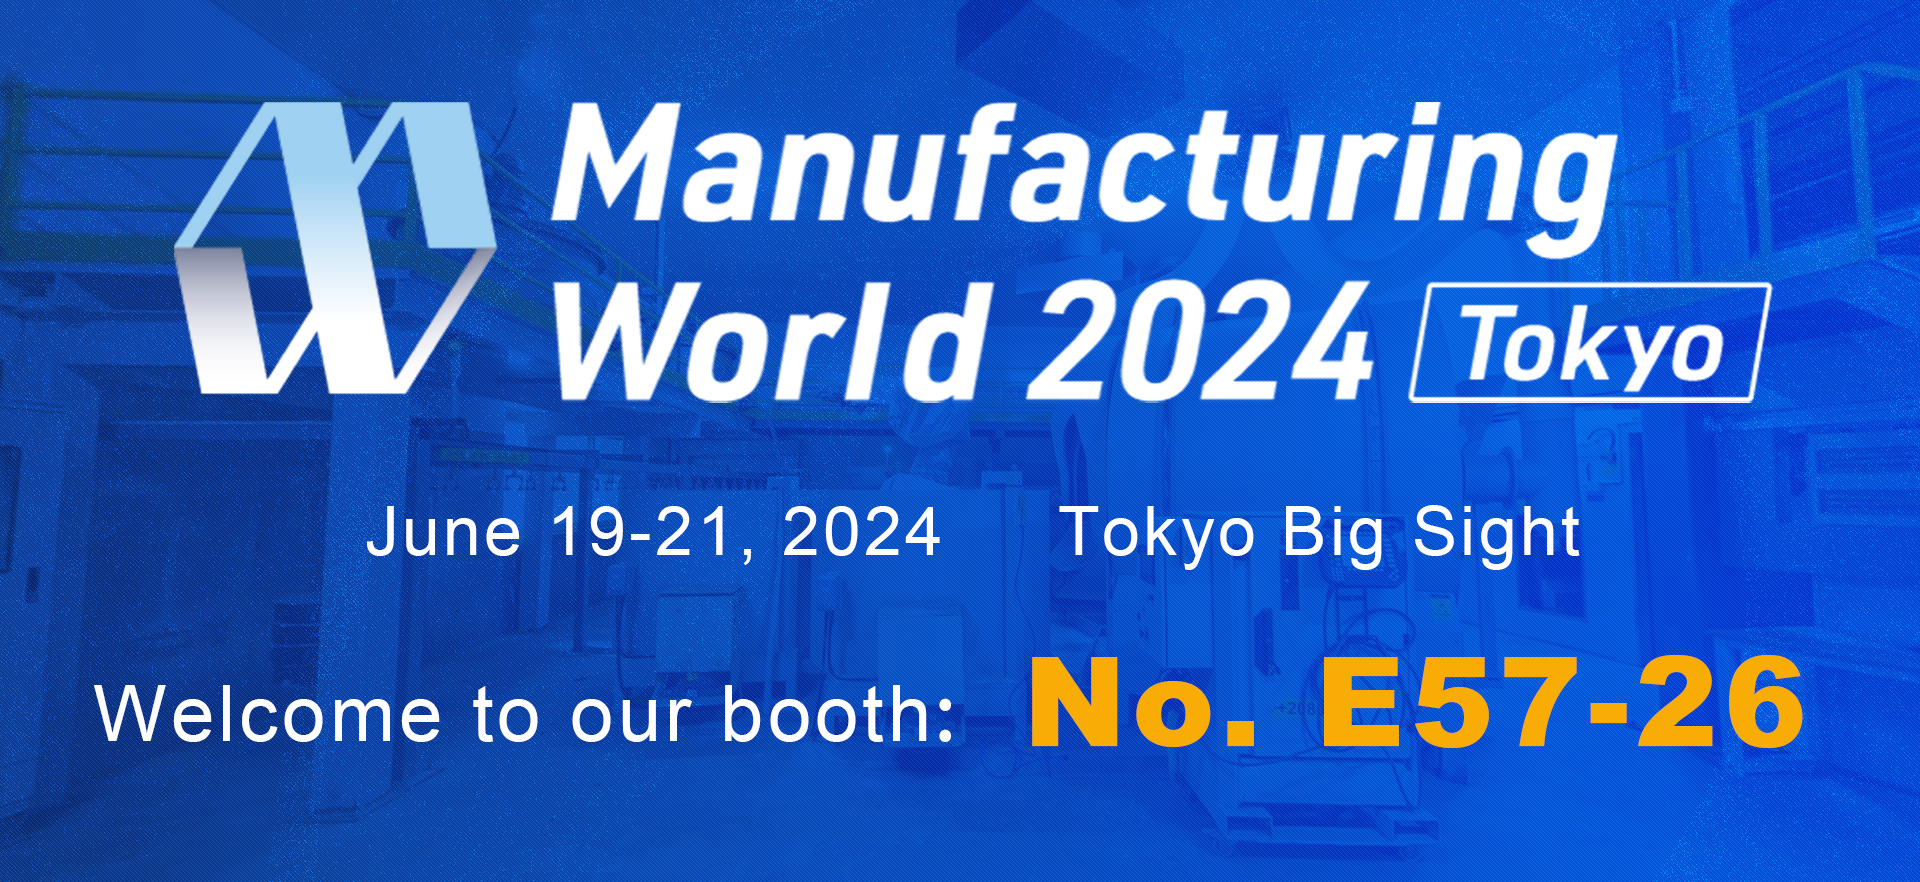 Tokyo Manufacturing World 2024